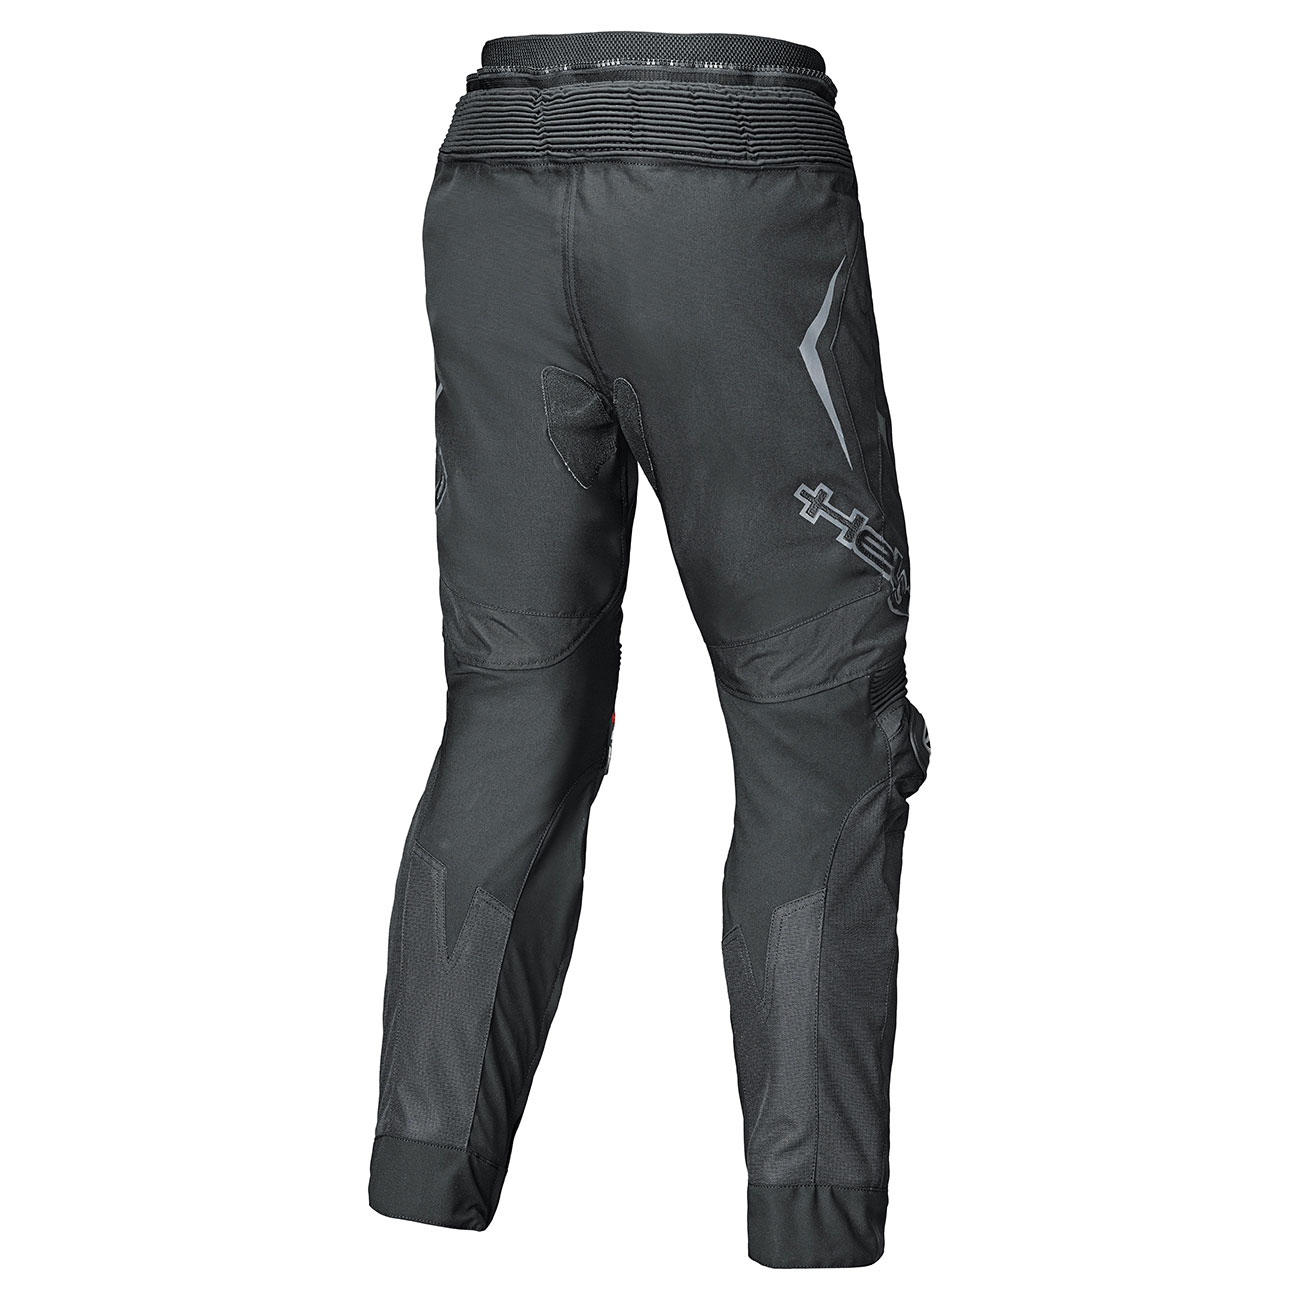 Grind SRX Pantalon sport